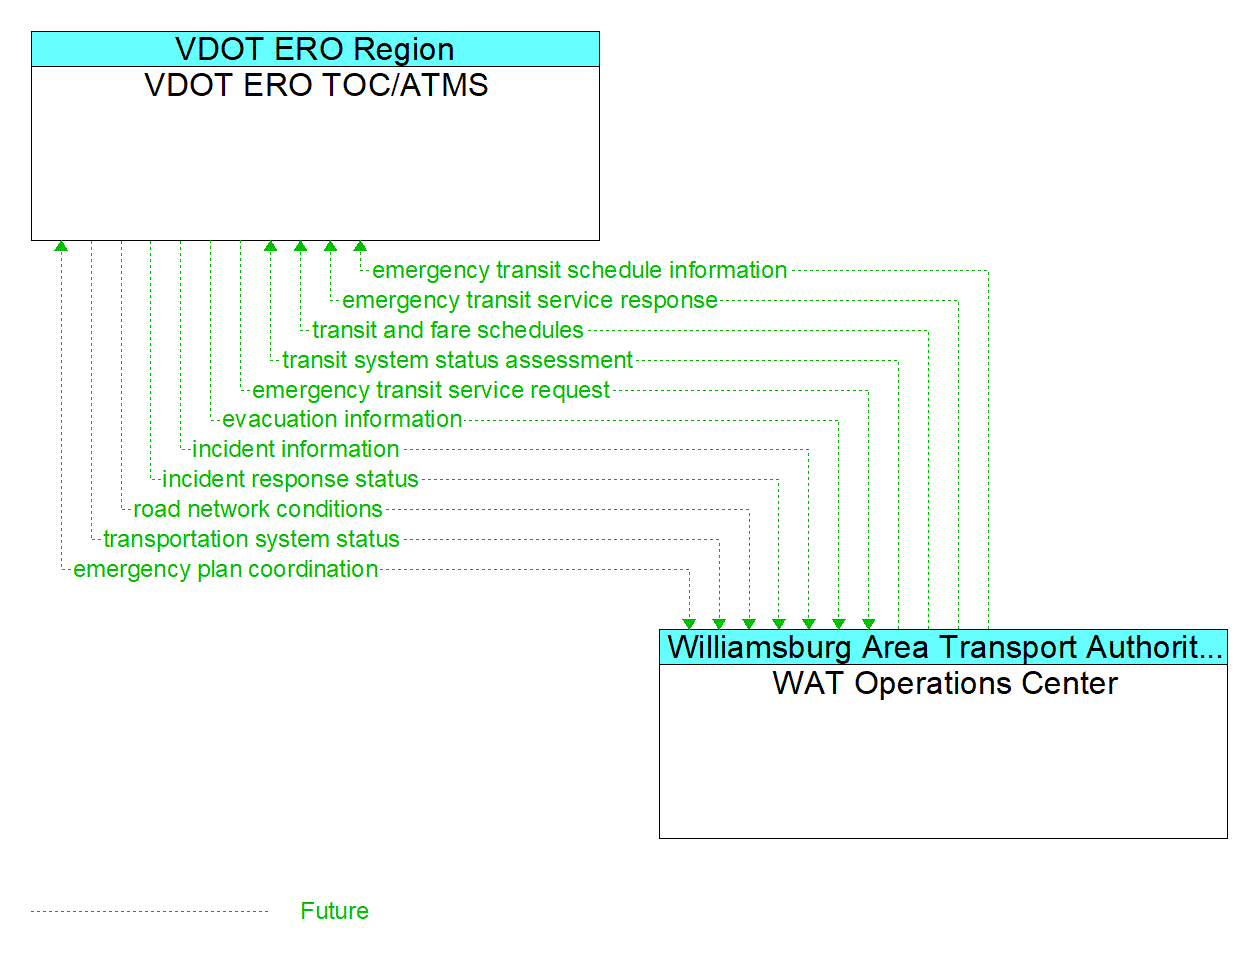 Architecture Flow Diagram: WAT Operations Center <--> VDOT ERO TOC/ATMS